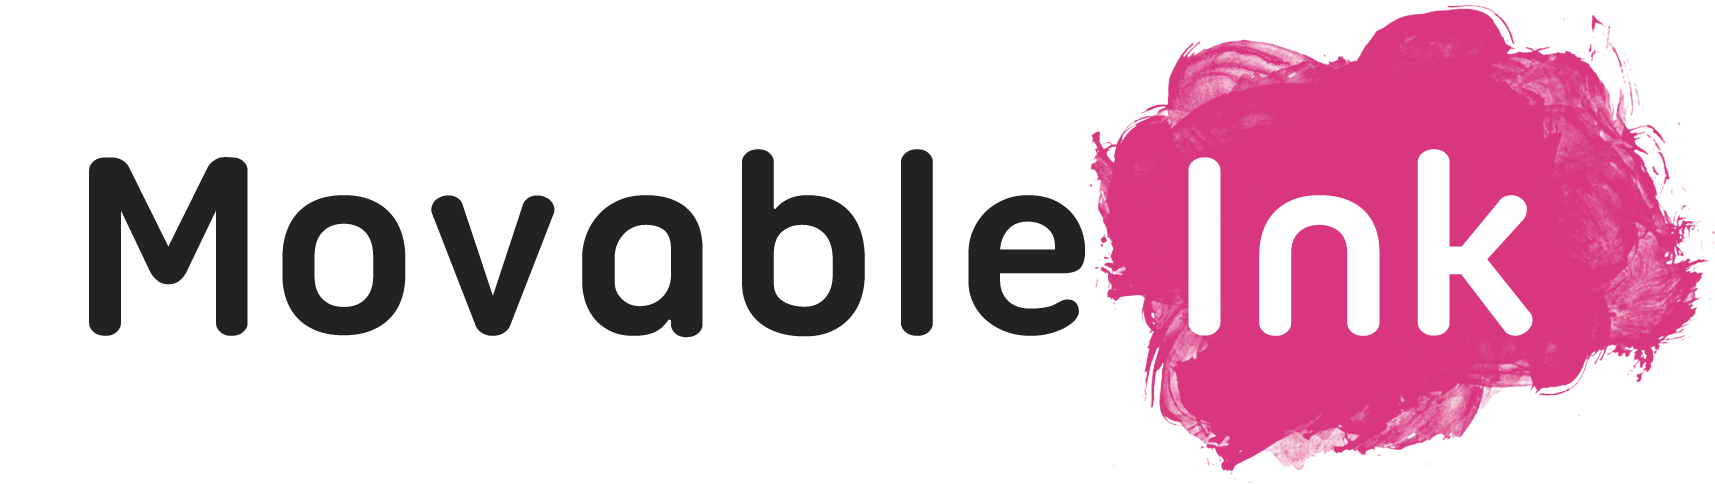 Movable ink logo